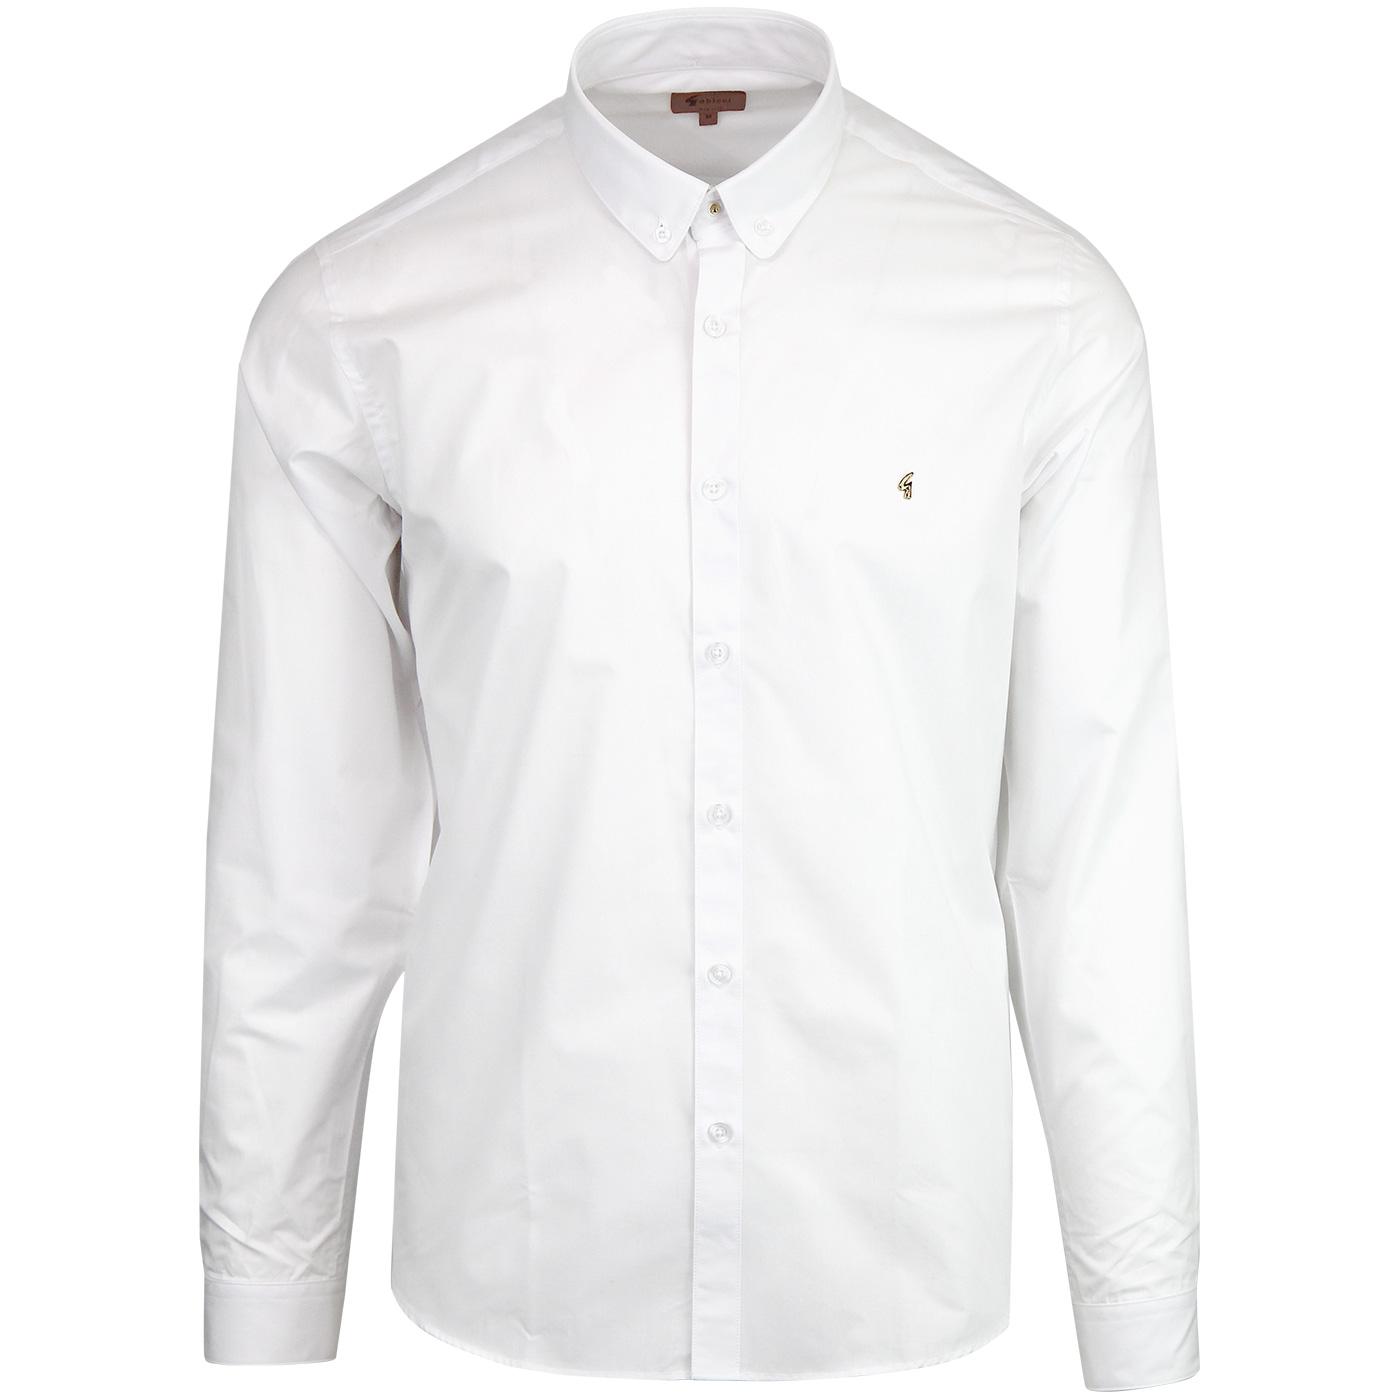 Antonio GABICCI VINTAGE 60s Mod Stud Collar Shirt